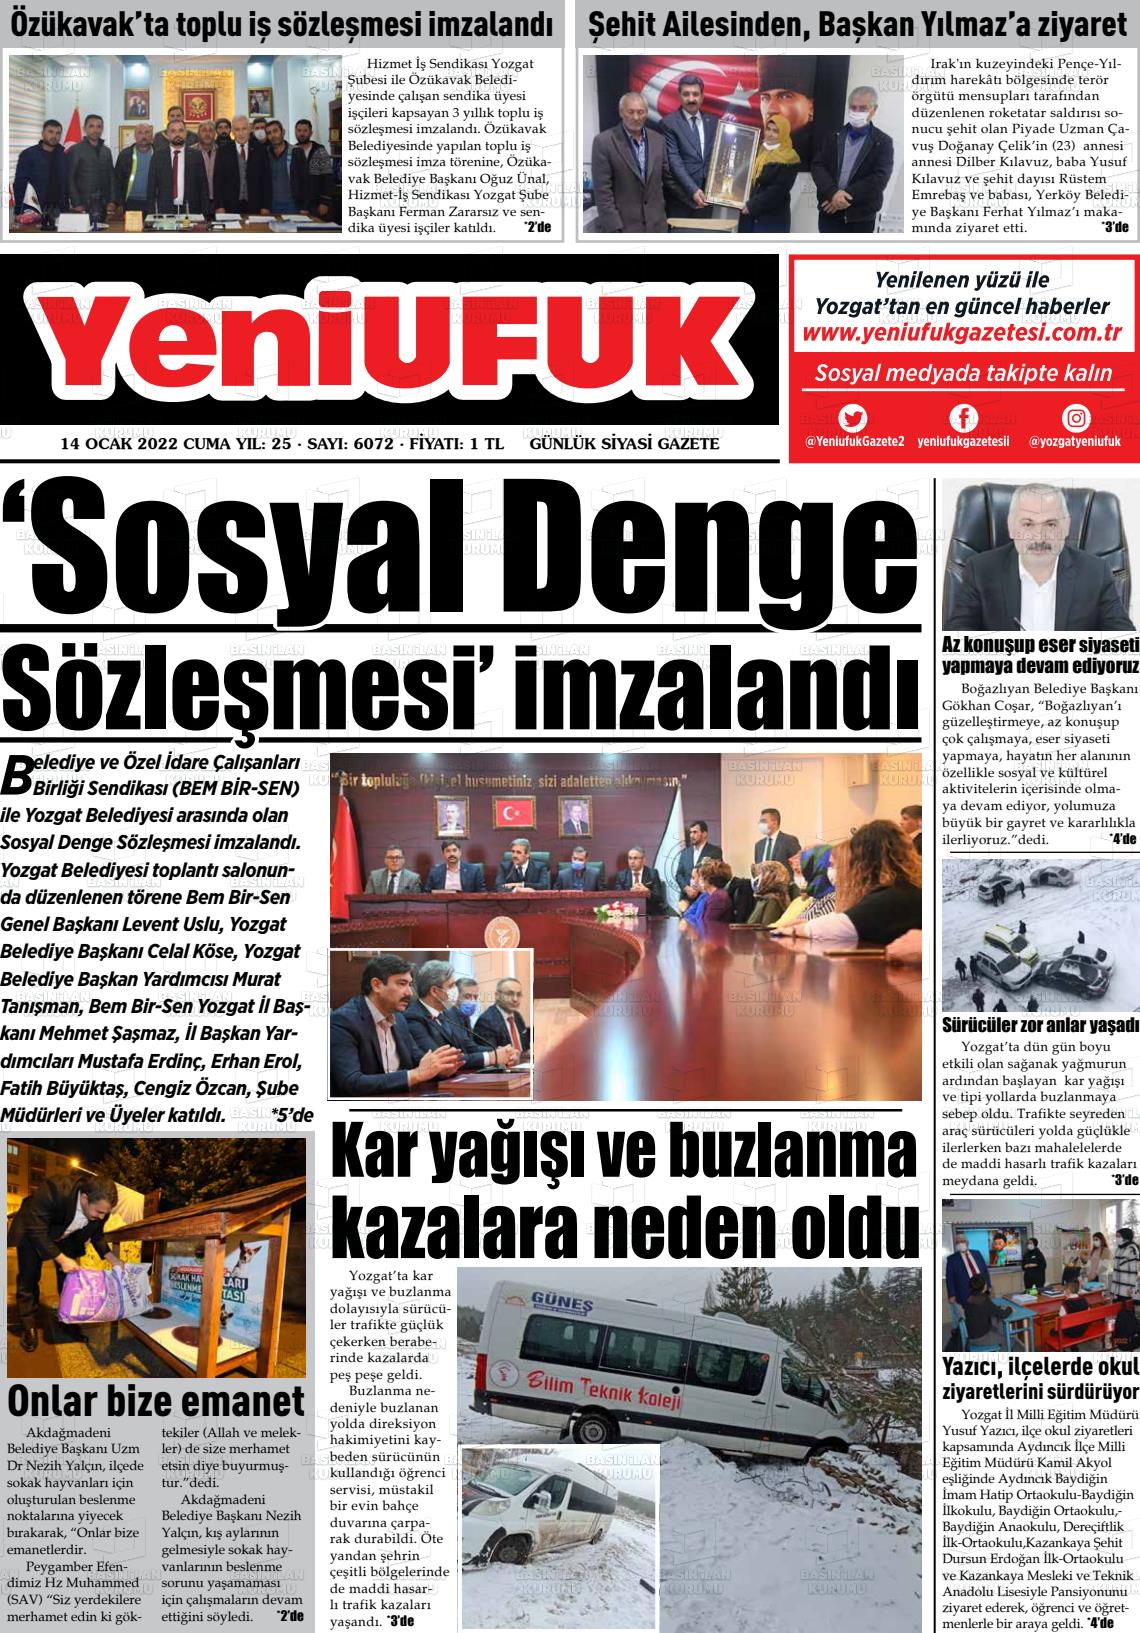 14 Ocak 2022 Yozgat Yeni Ufuk Gazete Manşeti